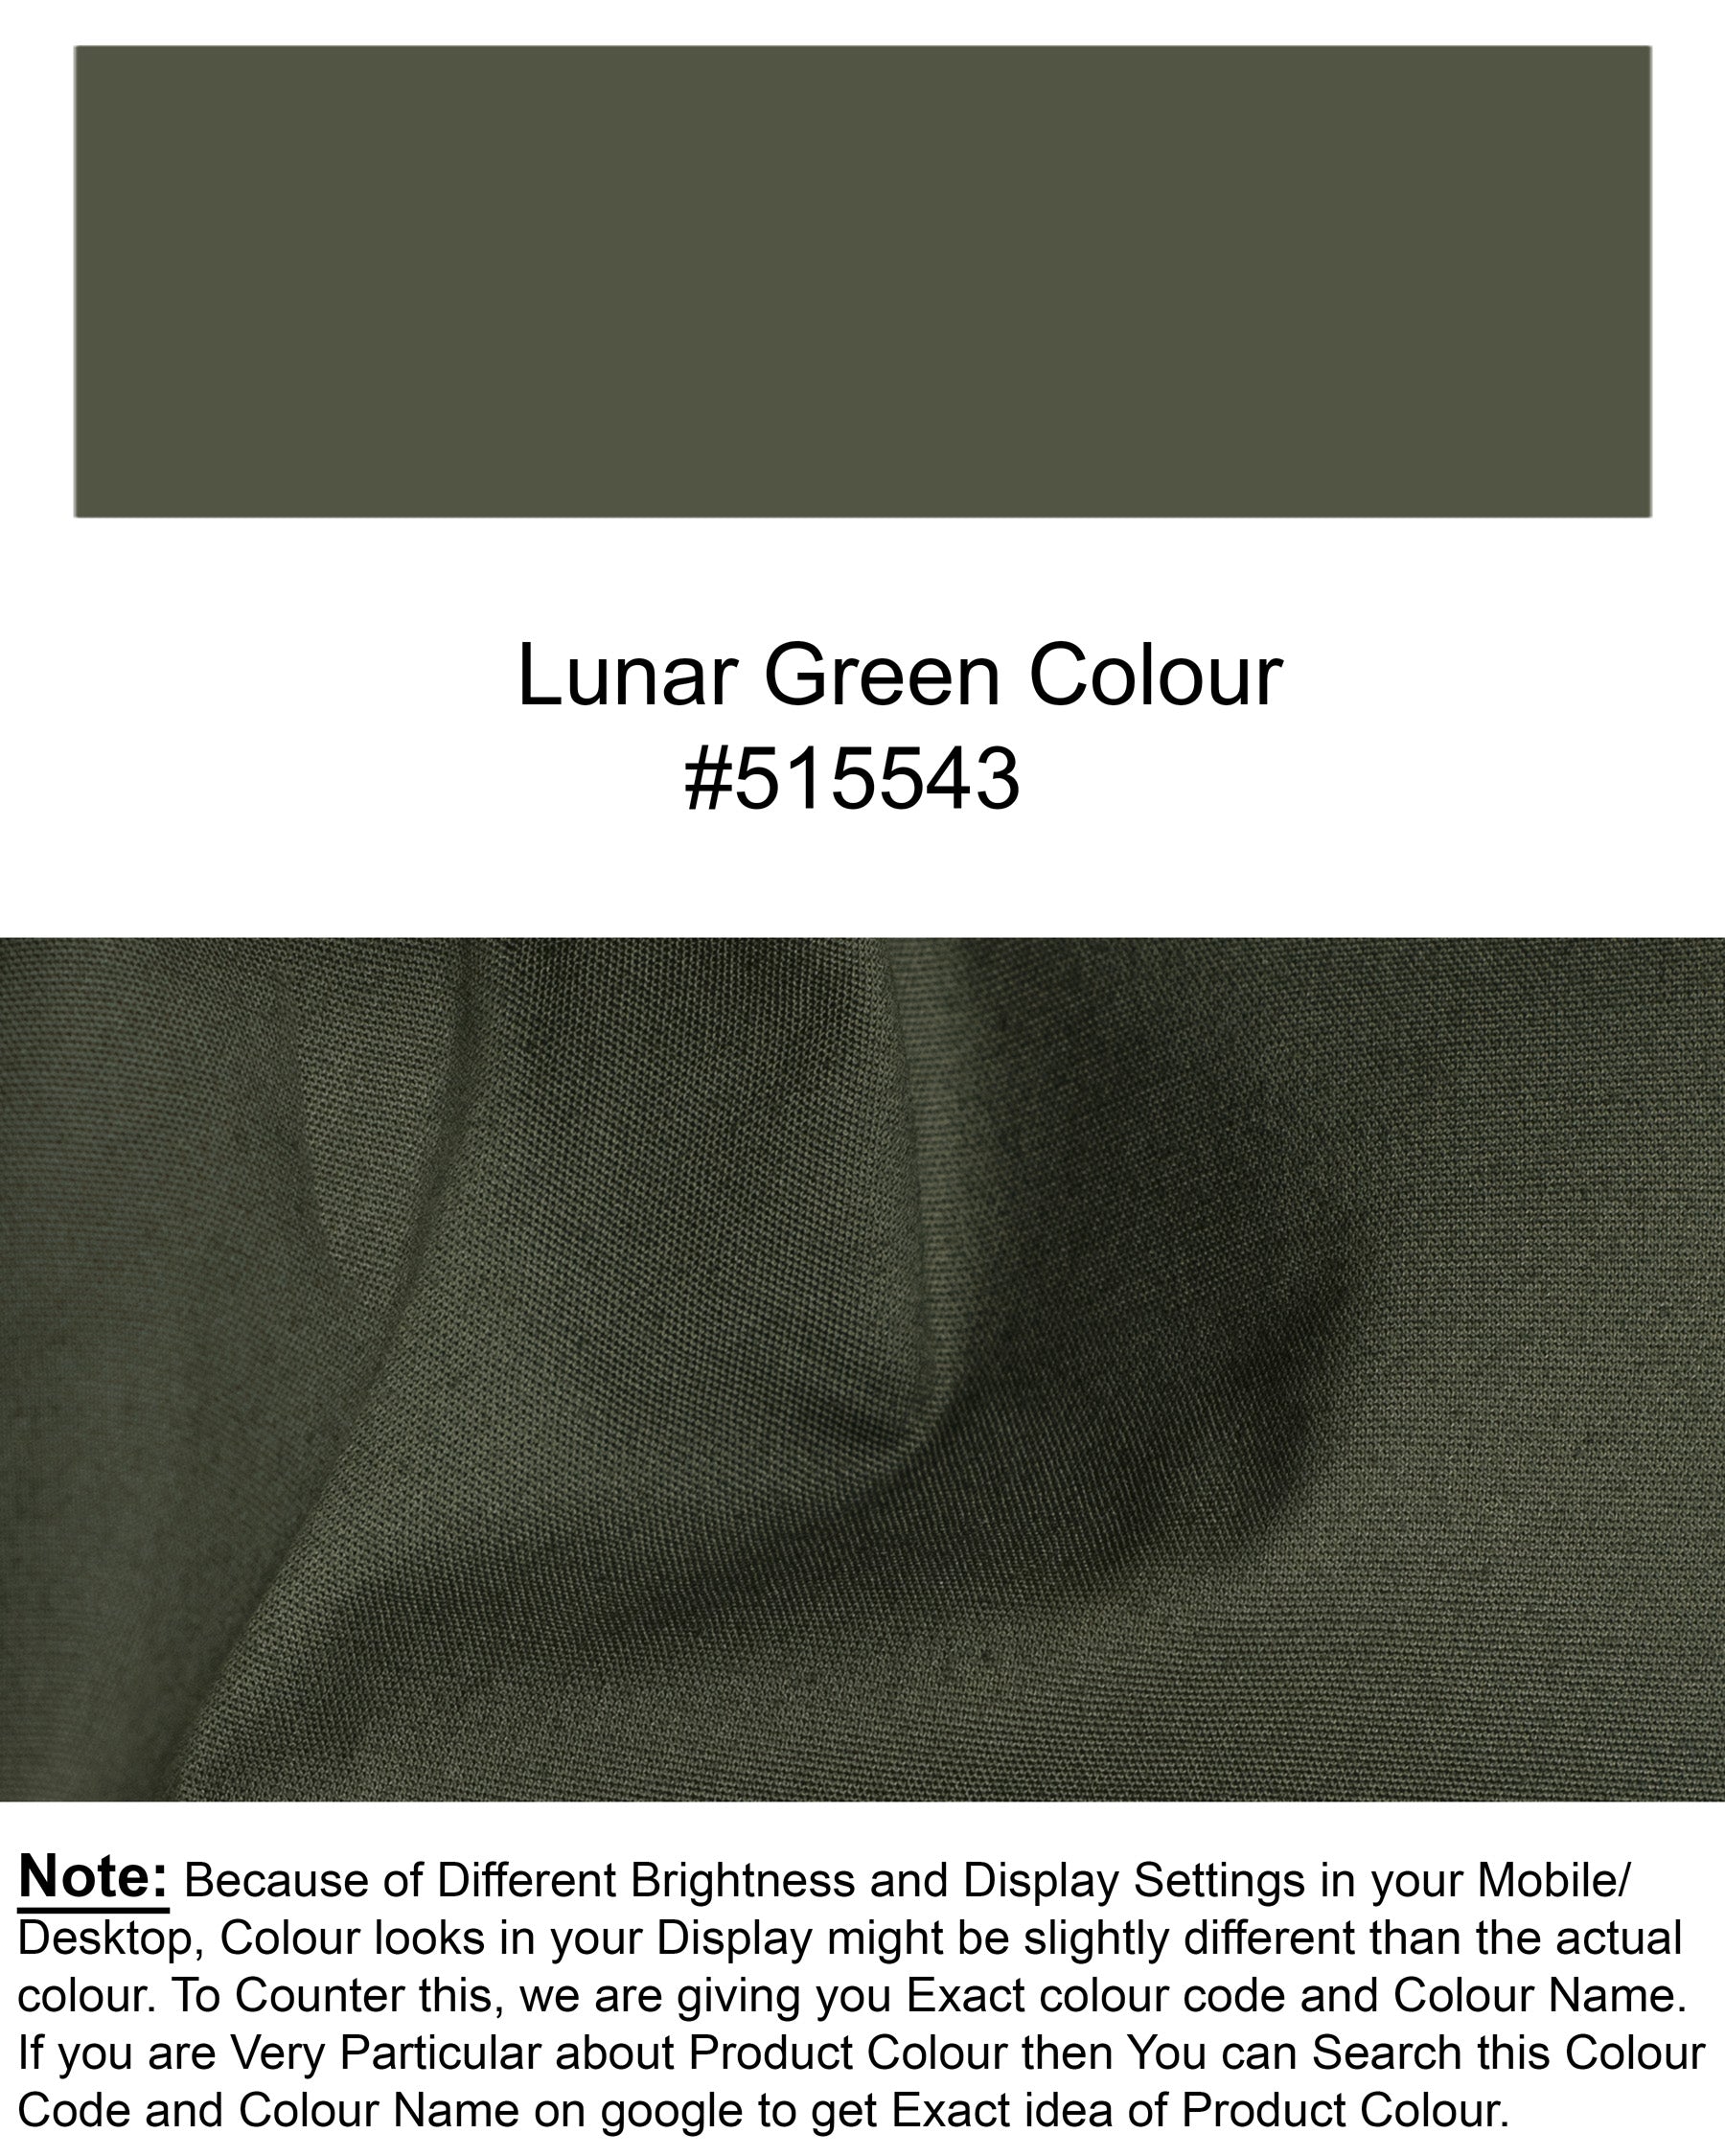 Lunar Green Premium Cotton Blazer BL1319-SBP-36, BL1319-SBP-38, BL1319-SBP-40, BL1319-SBP-42, BL1319-SBP-44, BL1319-SBP-46, BL1319-SBP-48, BL1319-SBP-50, BL1319-SBP-52, BL1319-SBP-54, BL1319-SBP-56, BL1319-SBP-58, BL1319-SBP-60